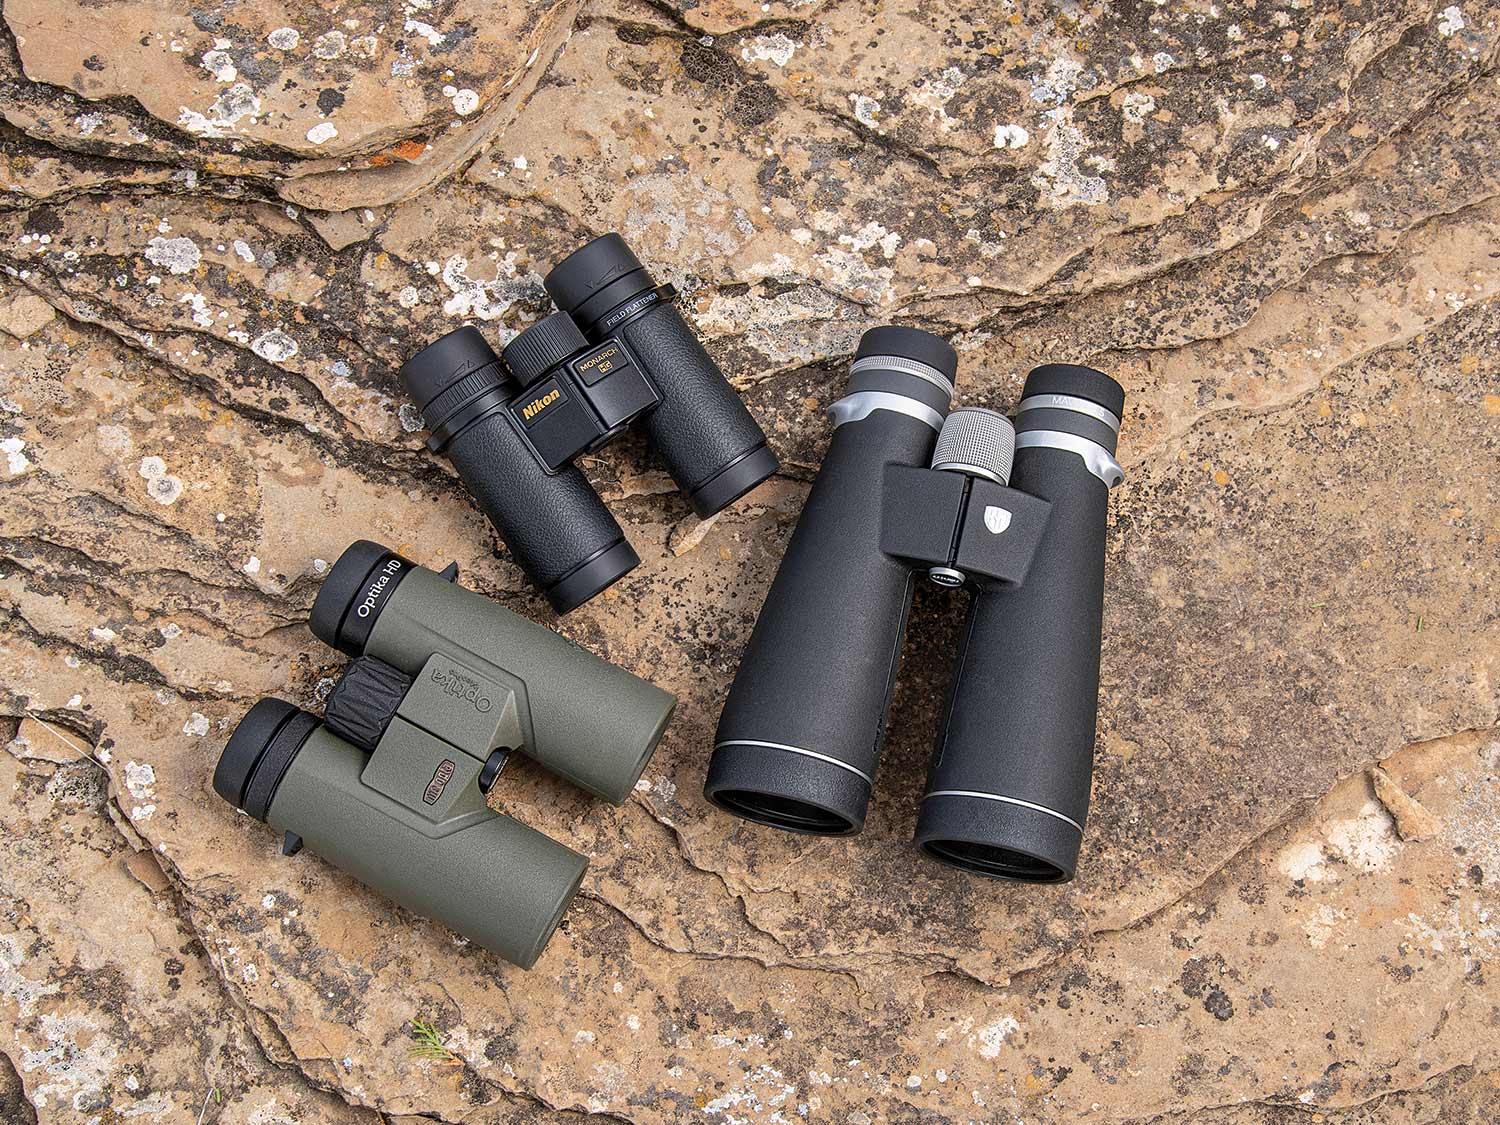 three binoculars on a stone ground